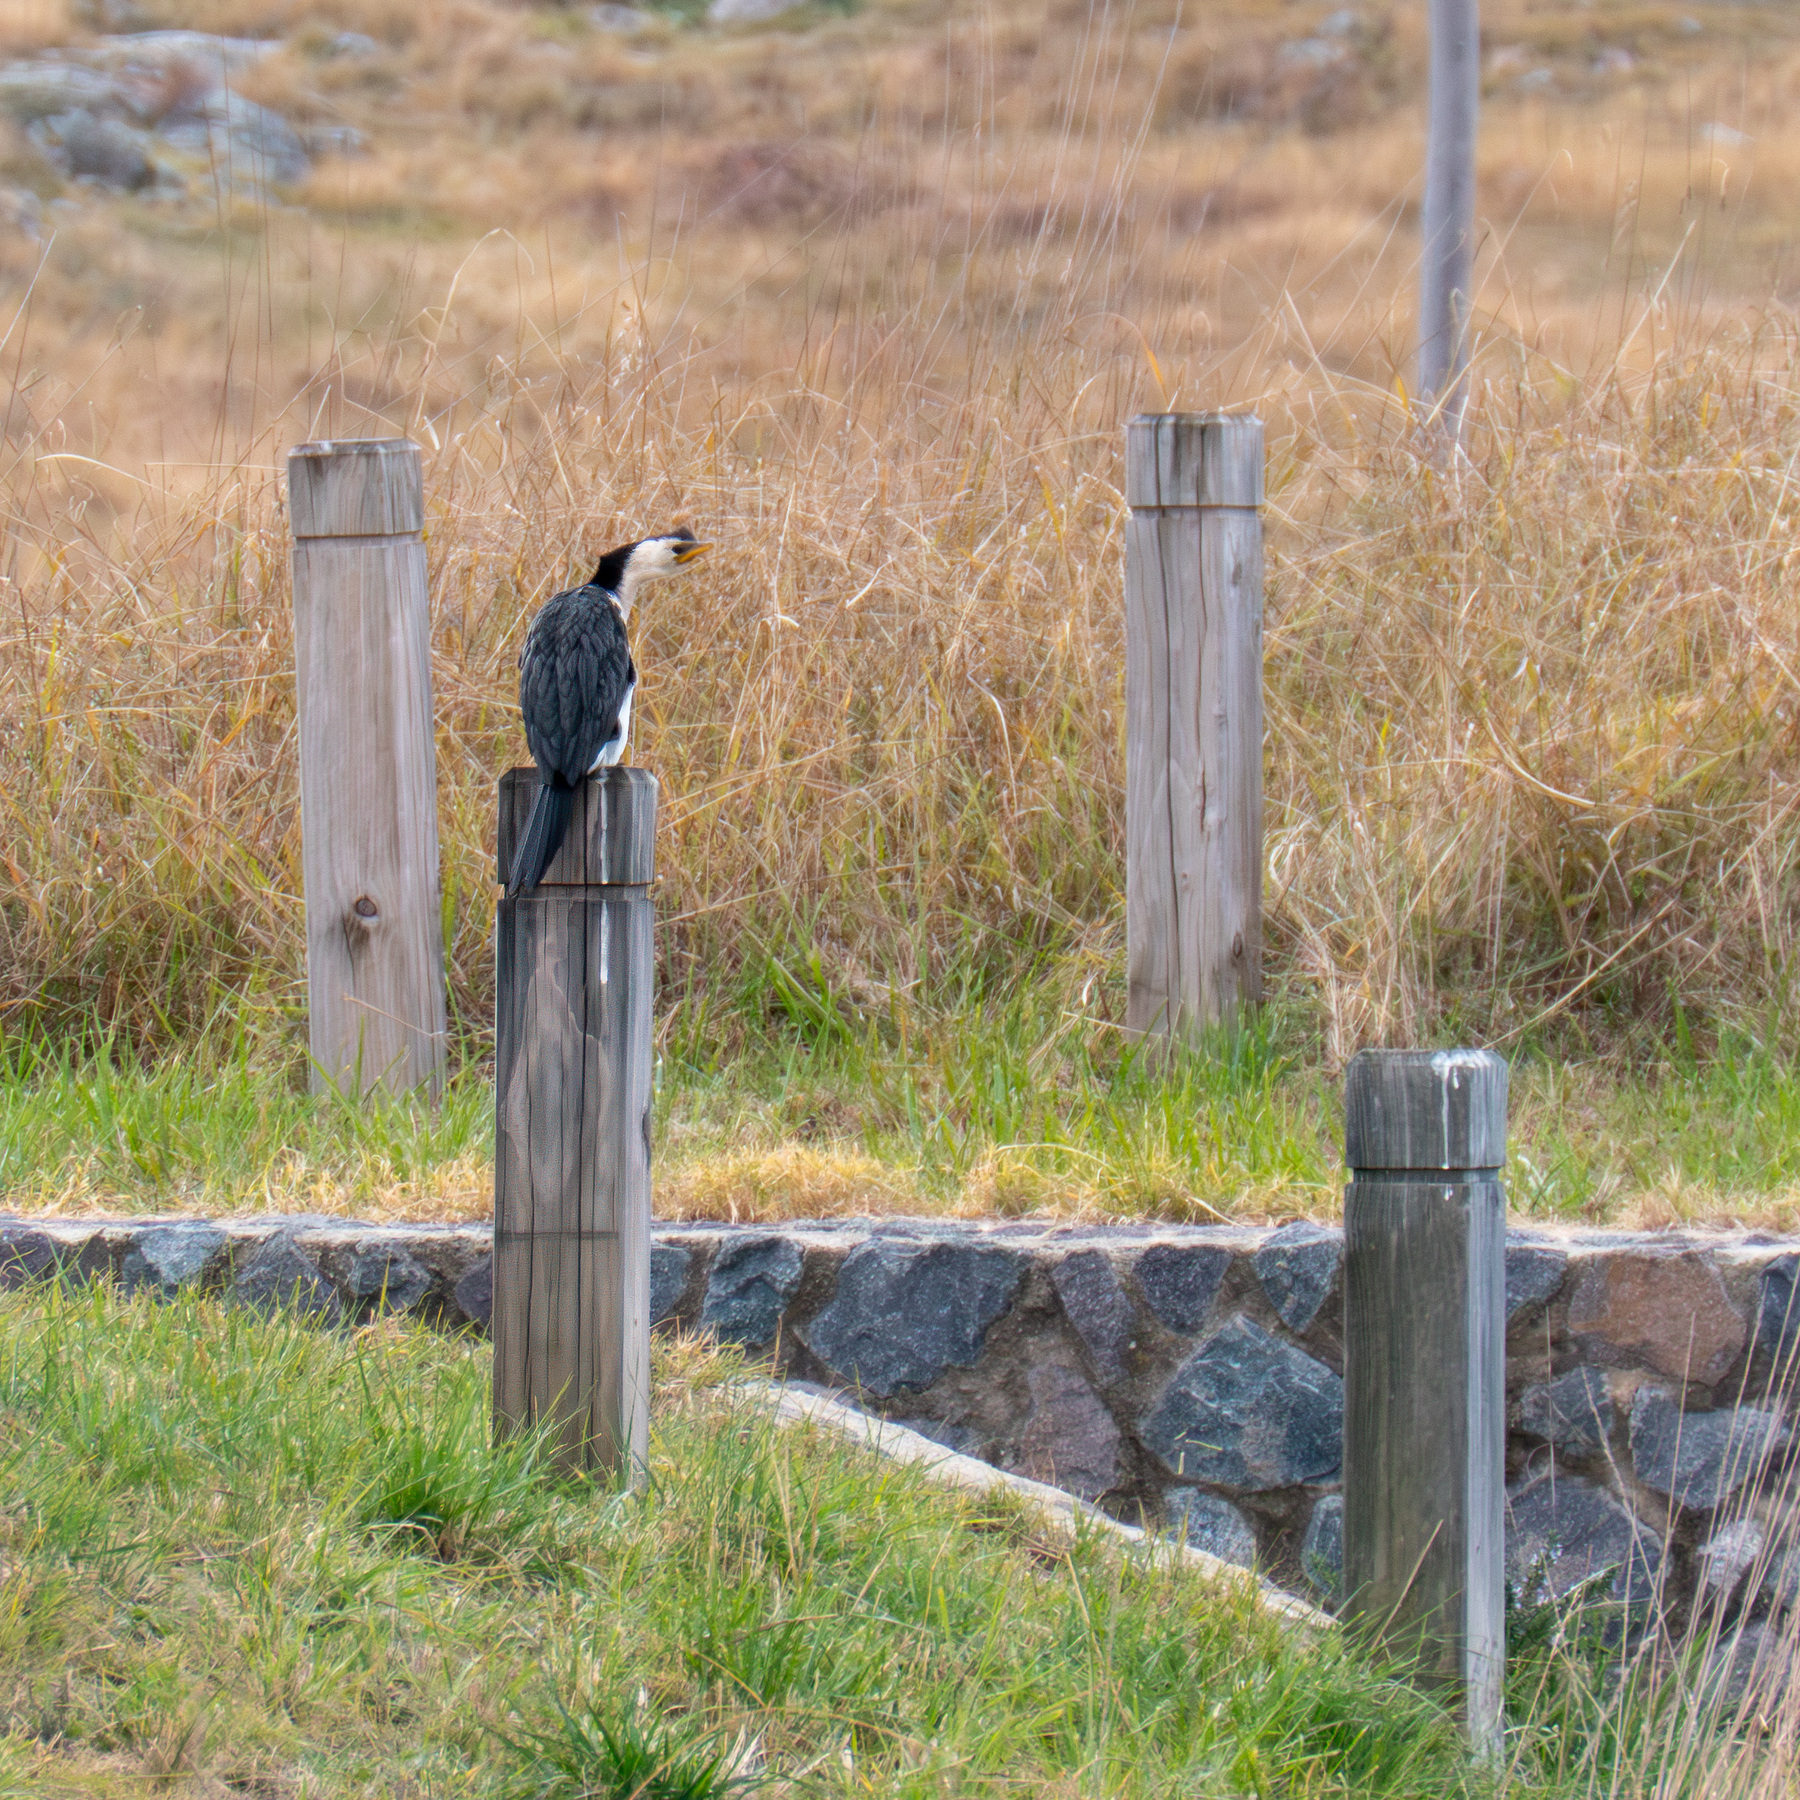 A cormorant perched on a post.